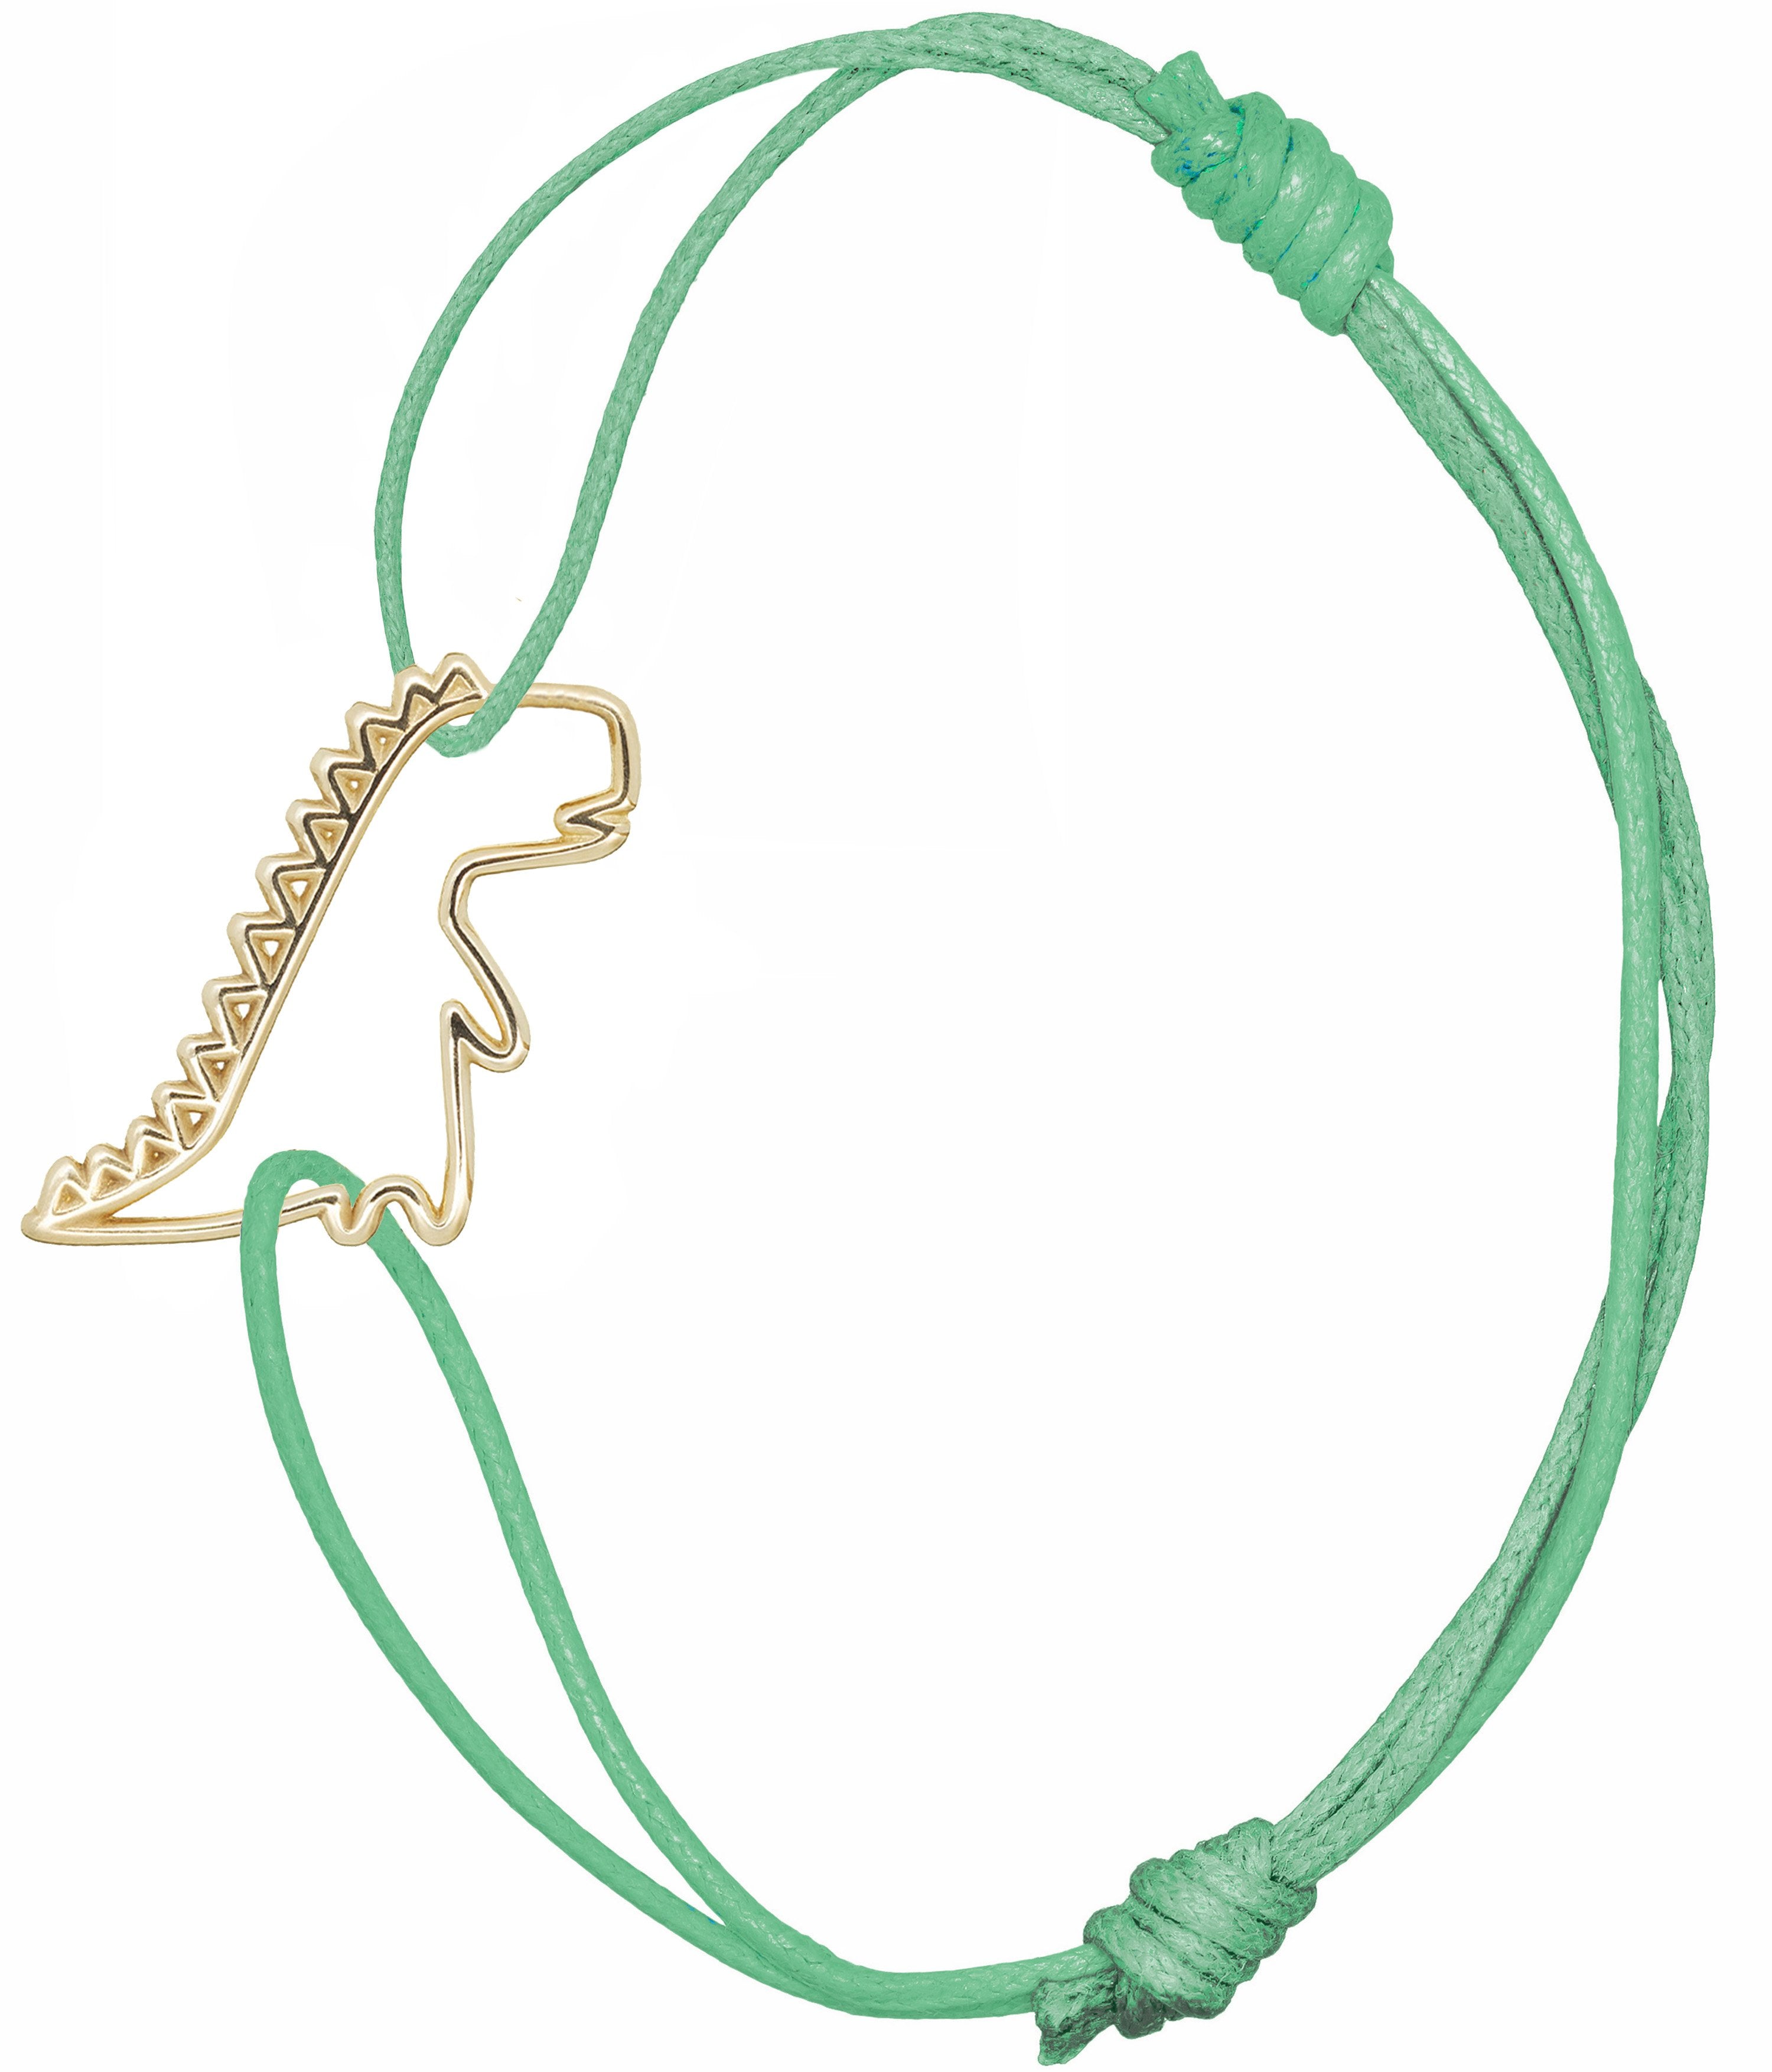 Mint green cord bracelet with gold dinosaur shaped pendant